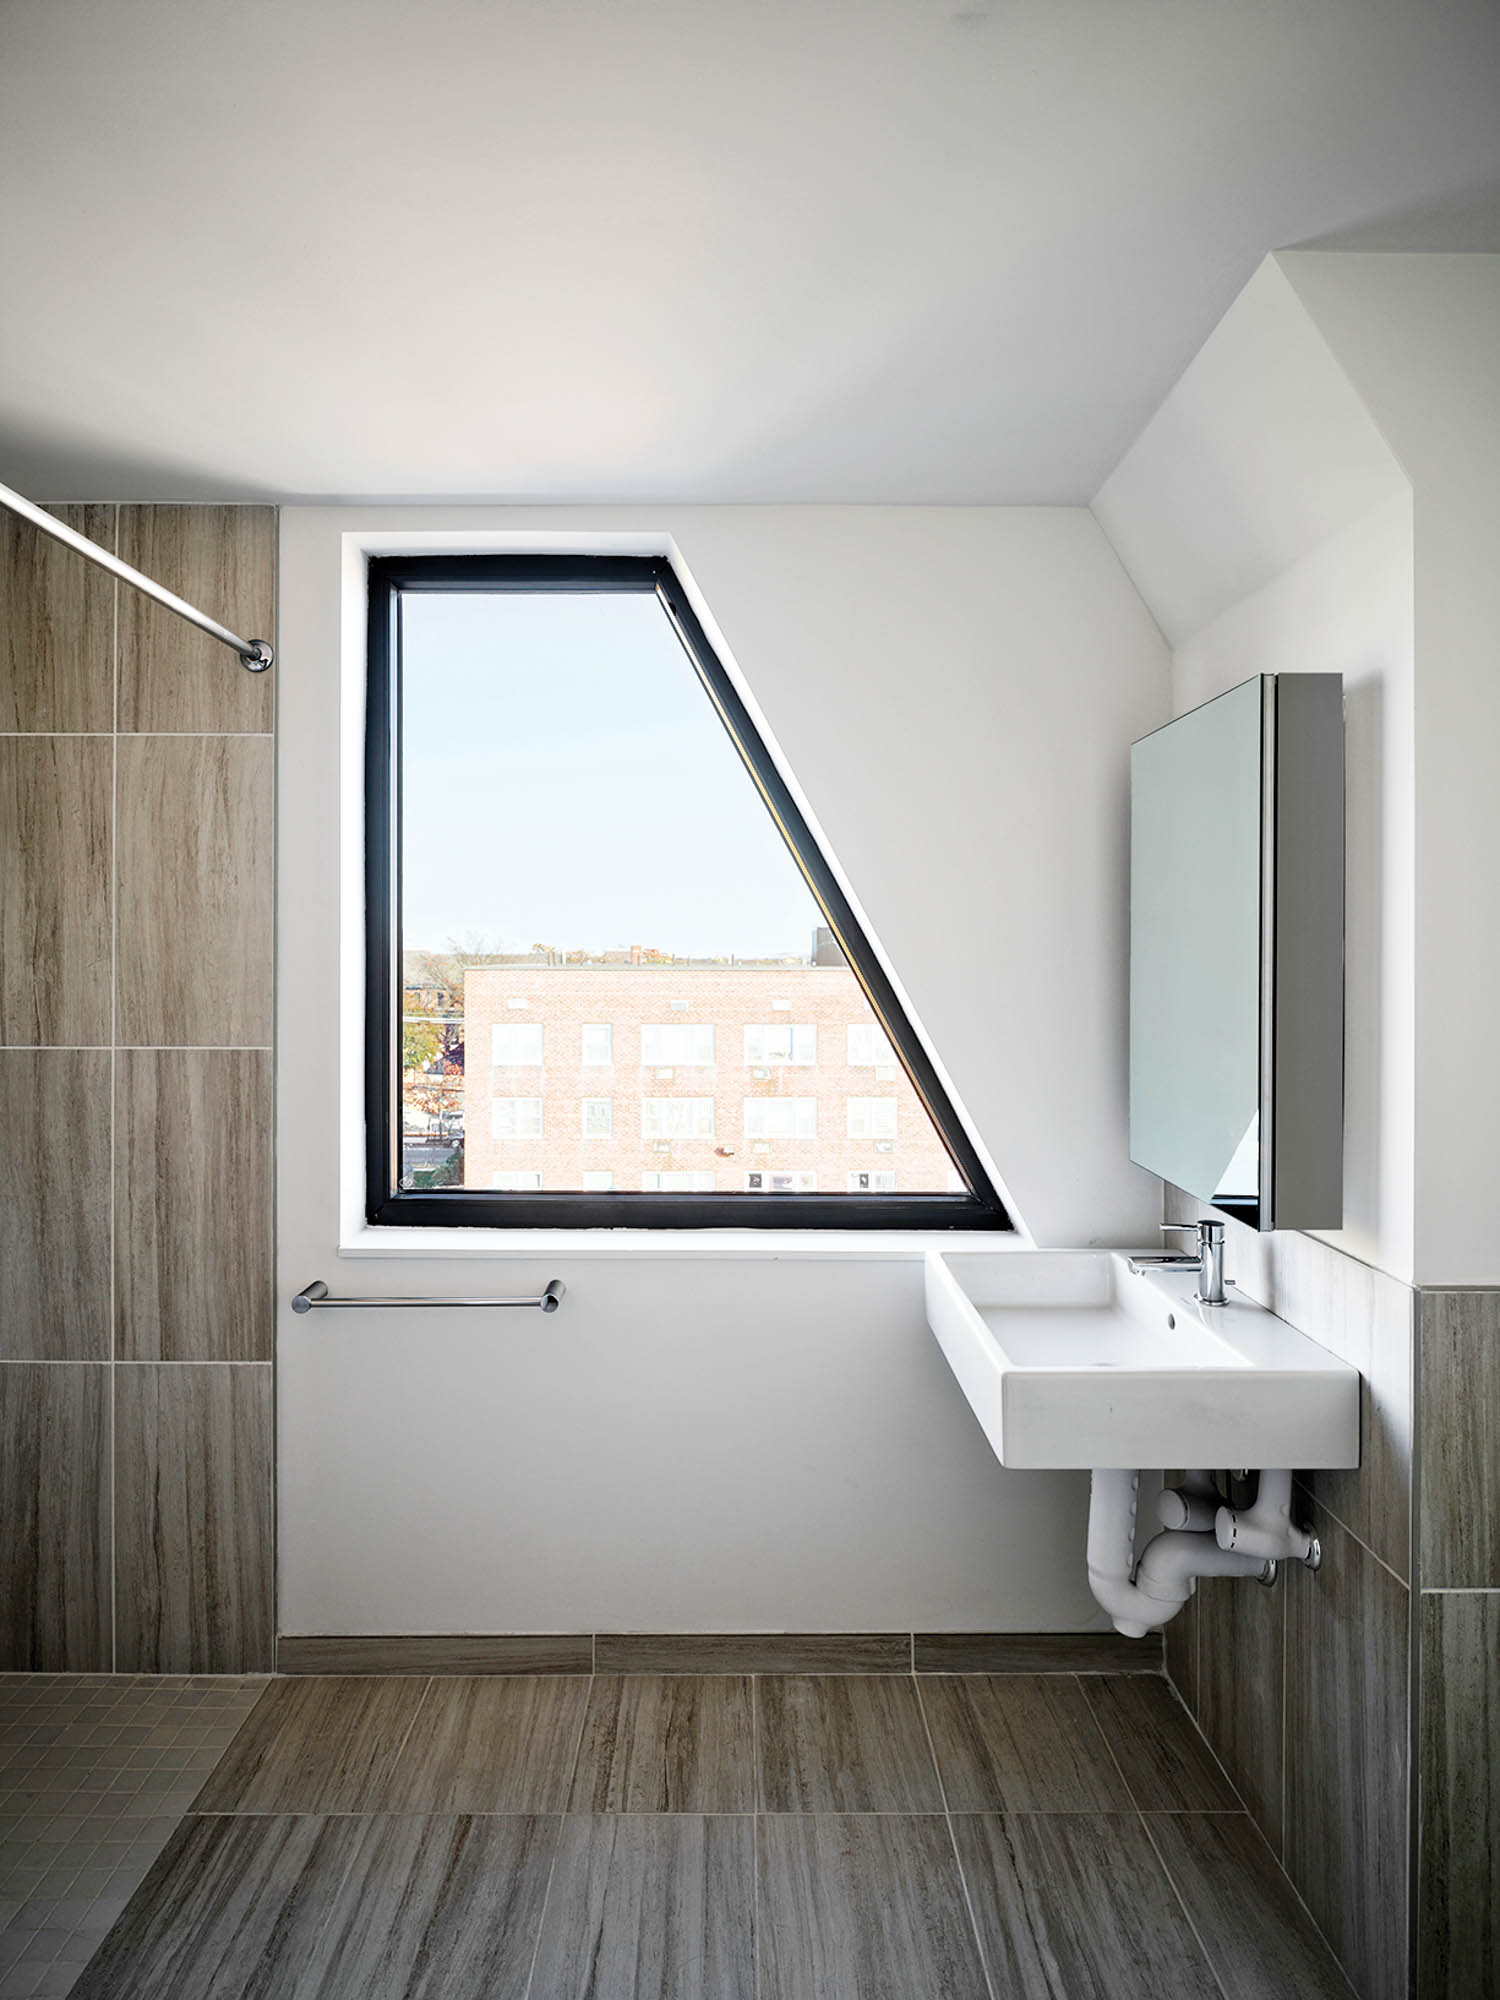 a geometric window in a bathroom